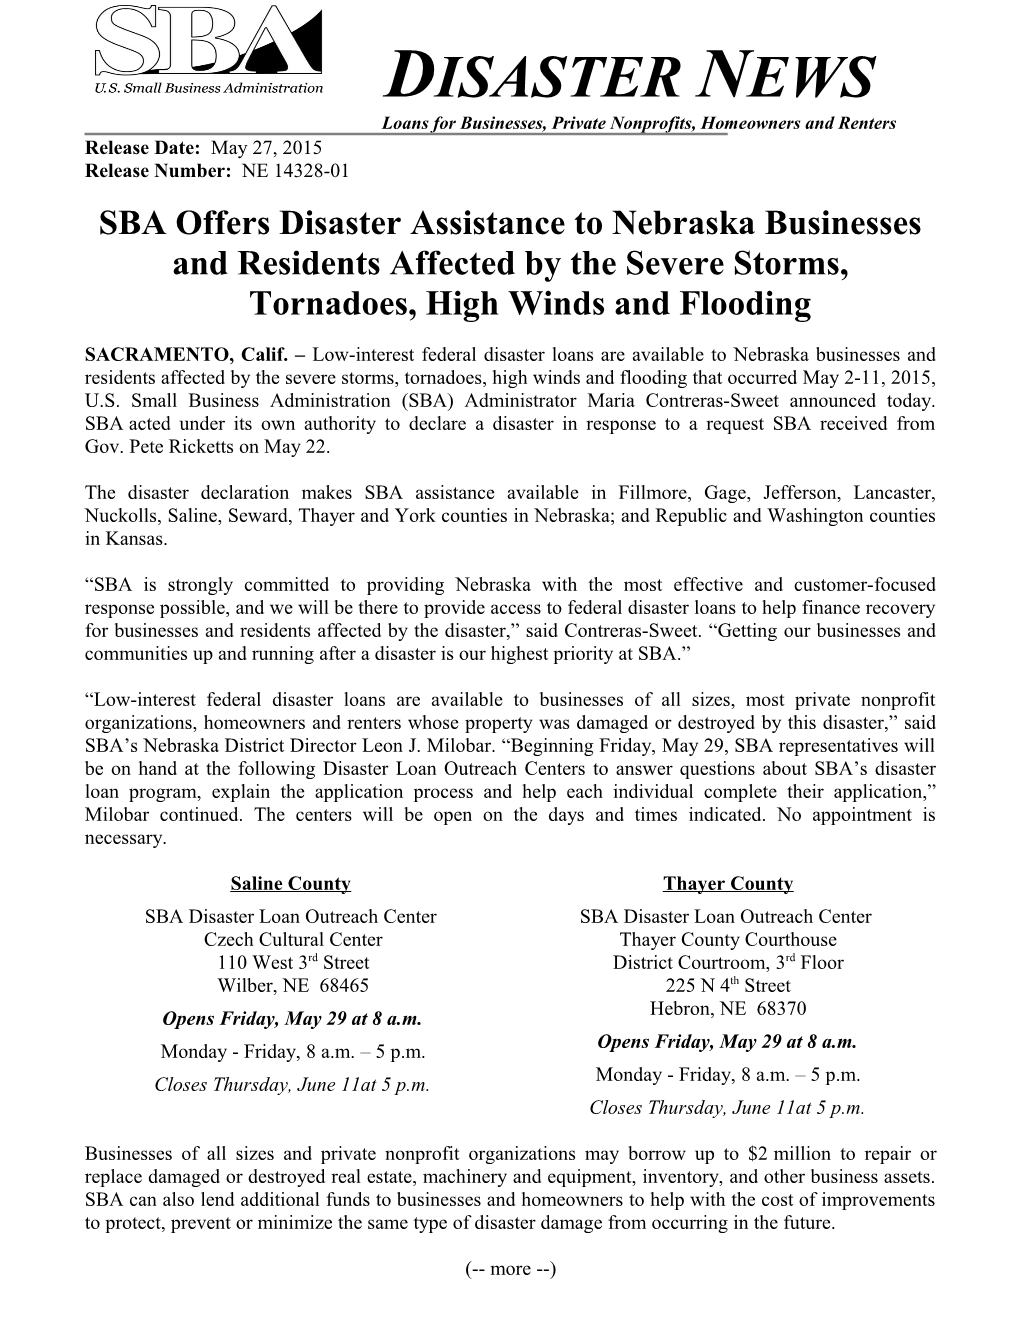 SBA Offers Disaster Assistance to Nebraskabusinesses